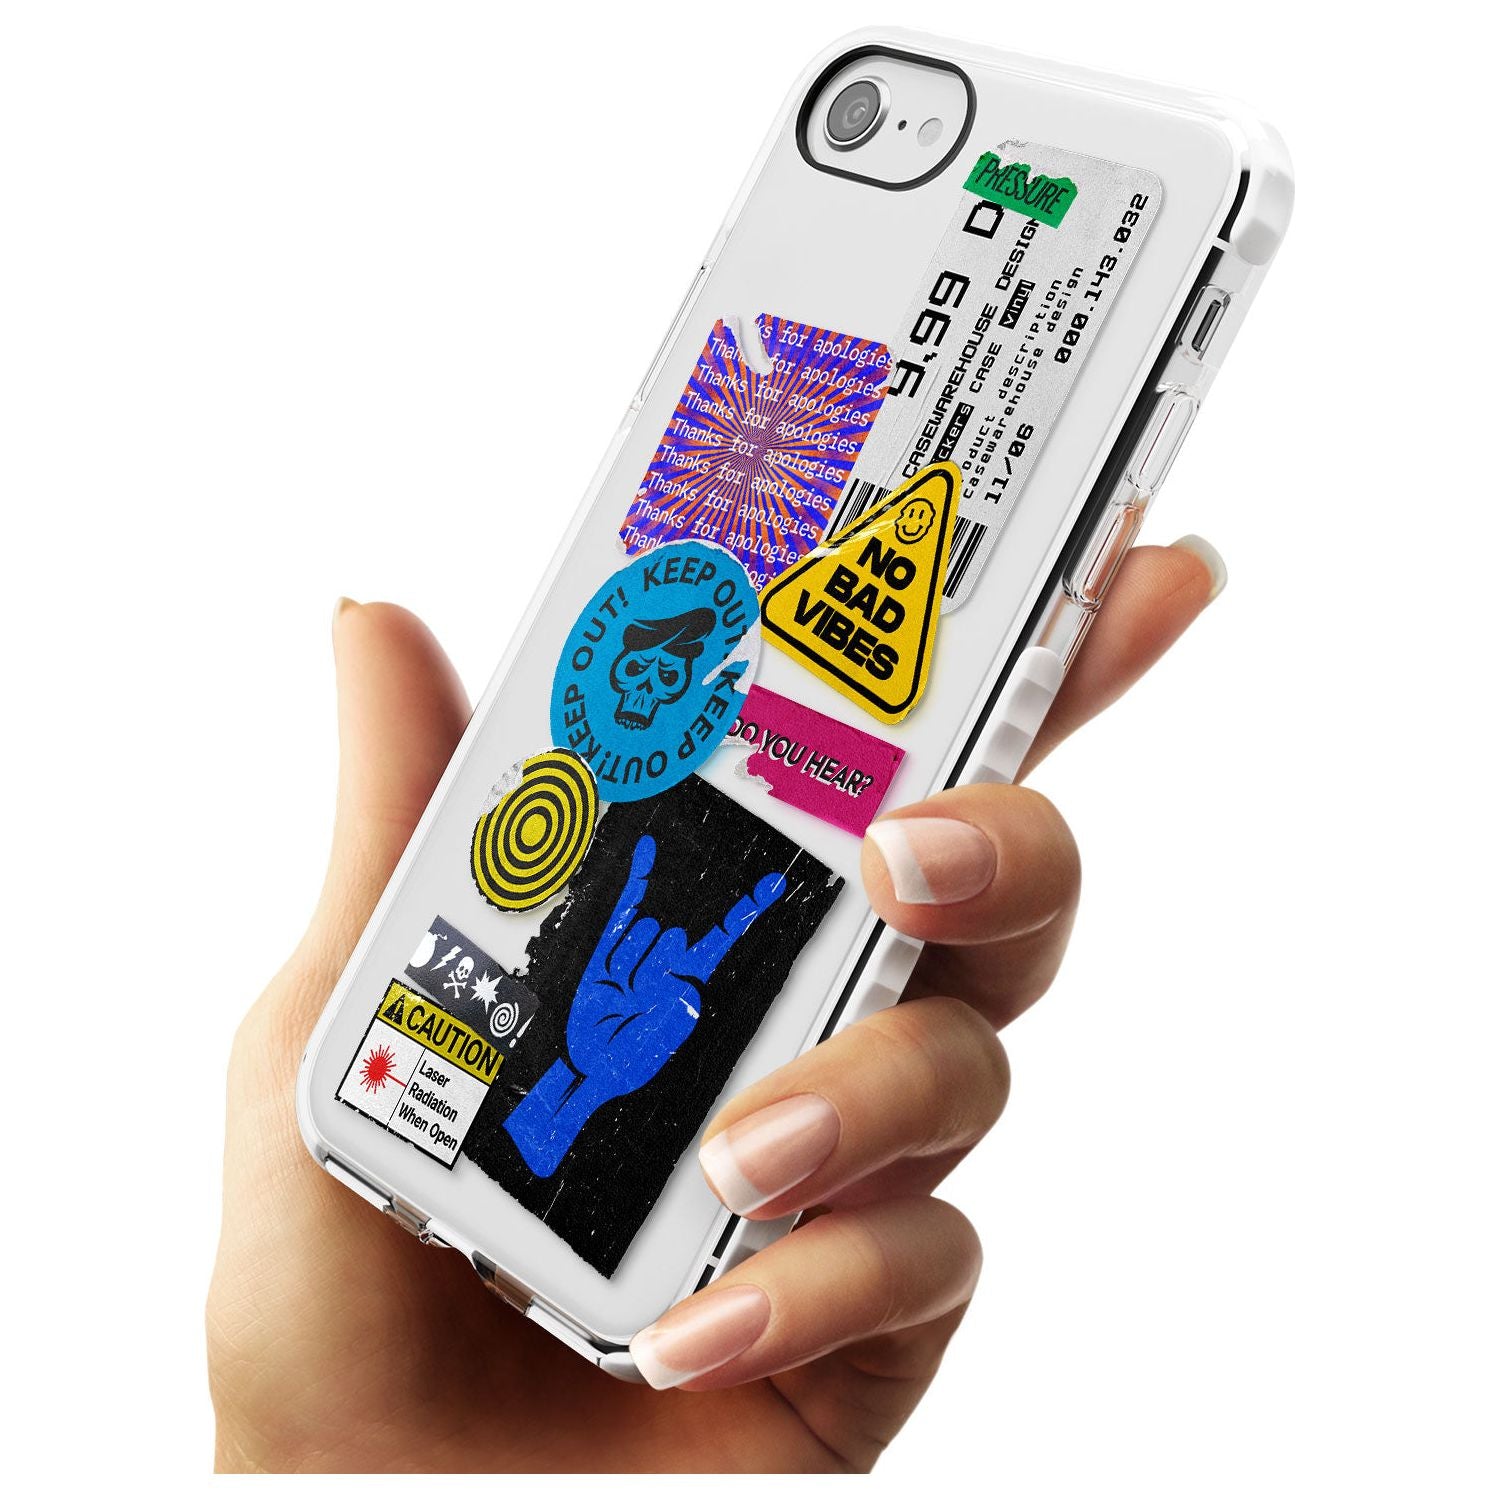 No Bad Vibes Sticker Mix Slim TPU Phone Case for iPhone SE 8 7 Plus